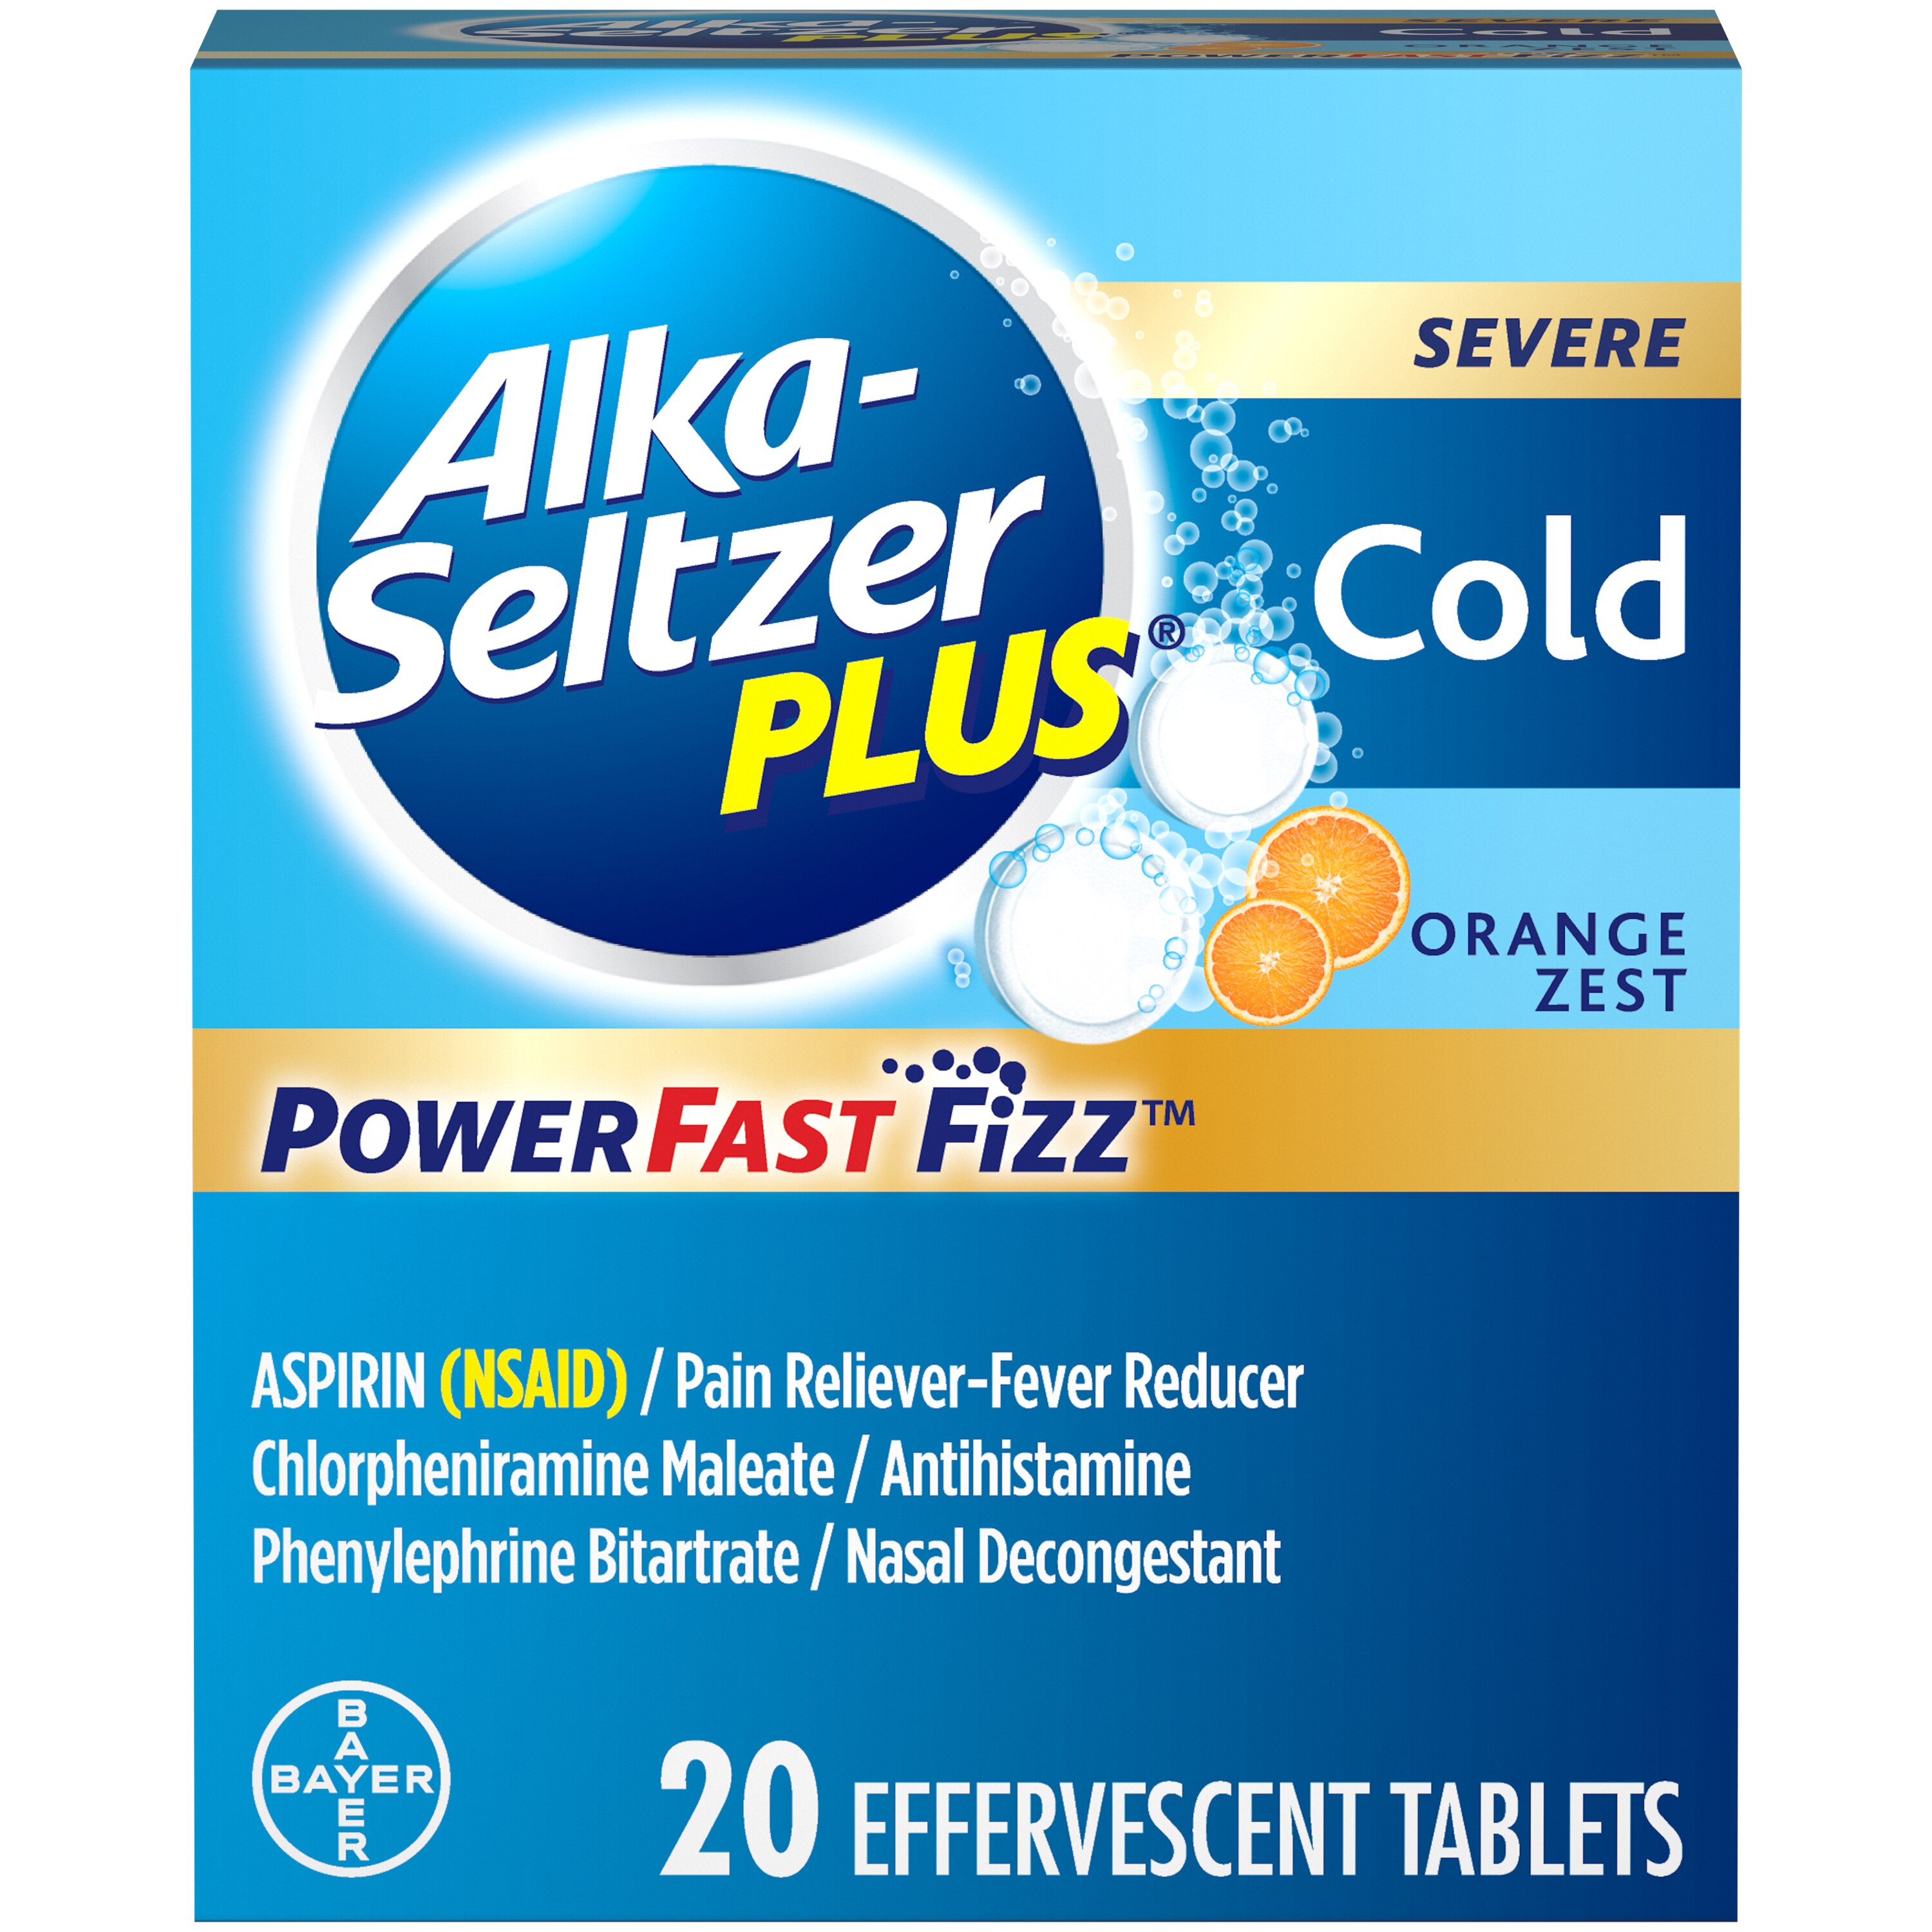 Alka-Seltzer Plus Severe Cold PowerFast Fizz Orange Zest Effervescent Tablets, 20ct